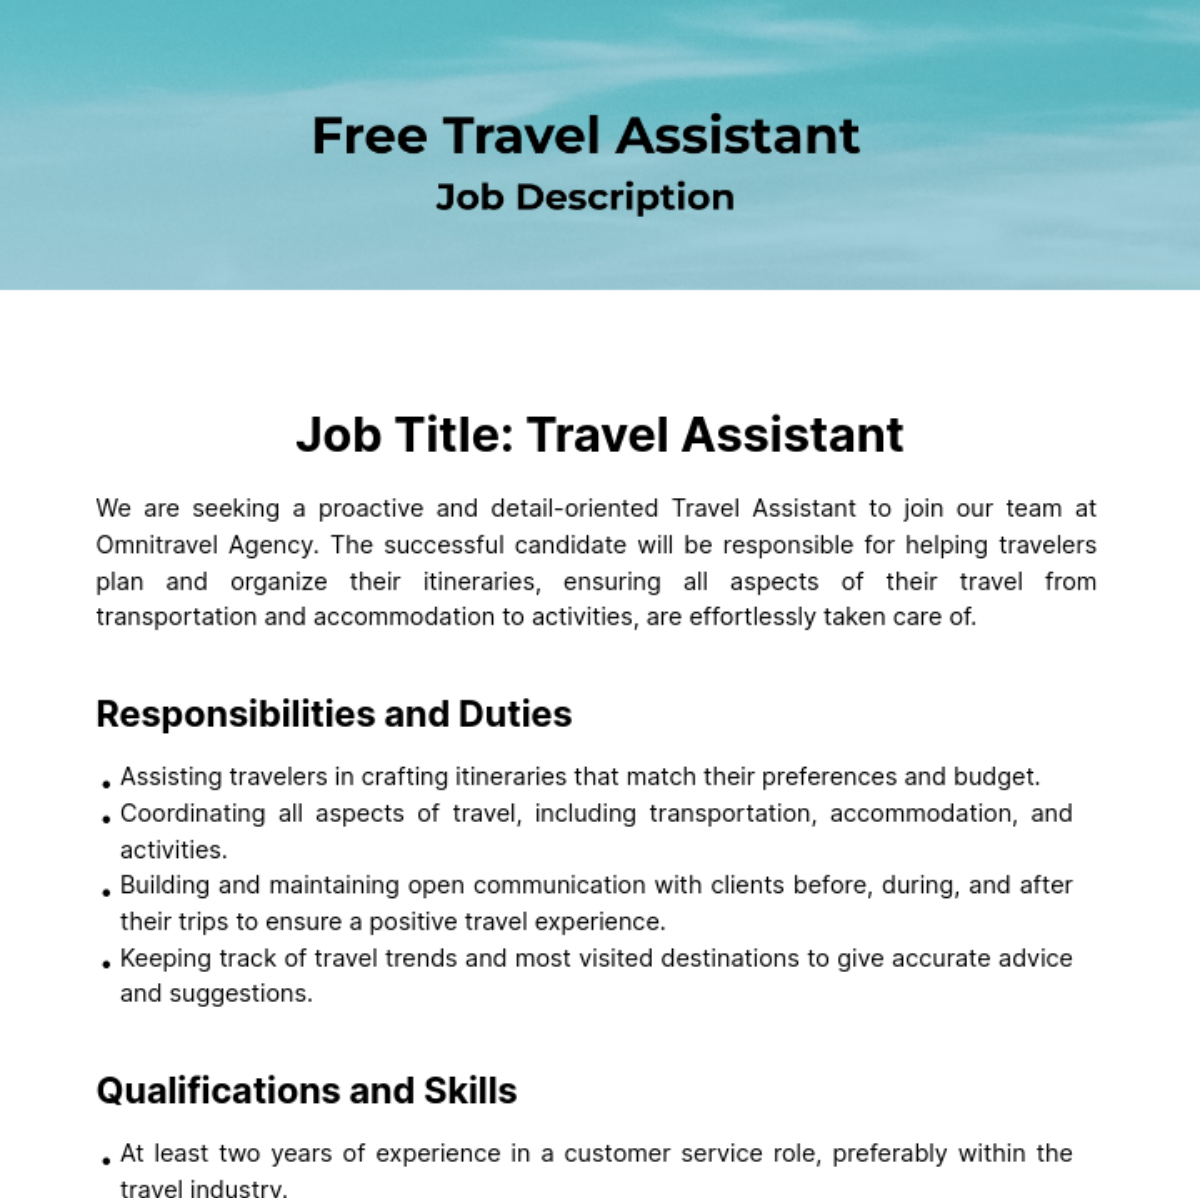 Free Travel Assistant Job Description Template